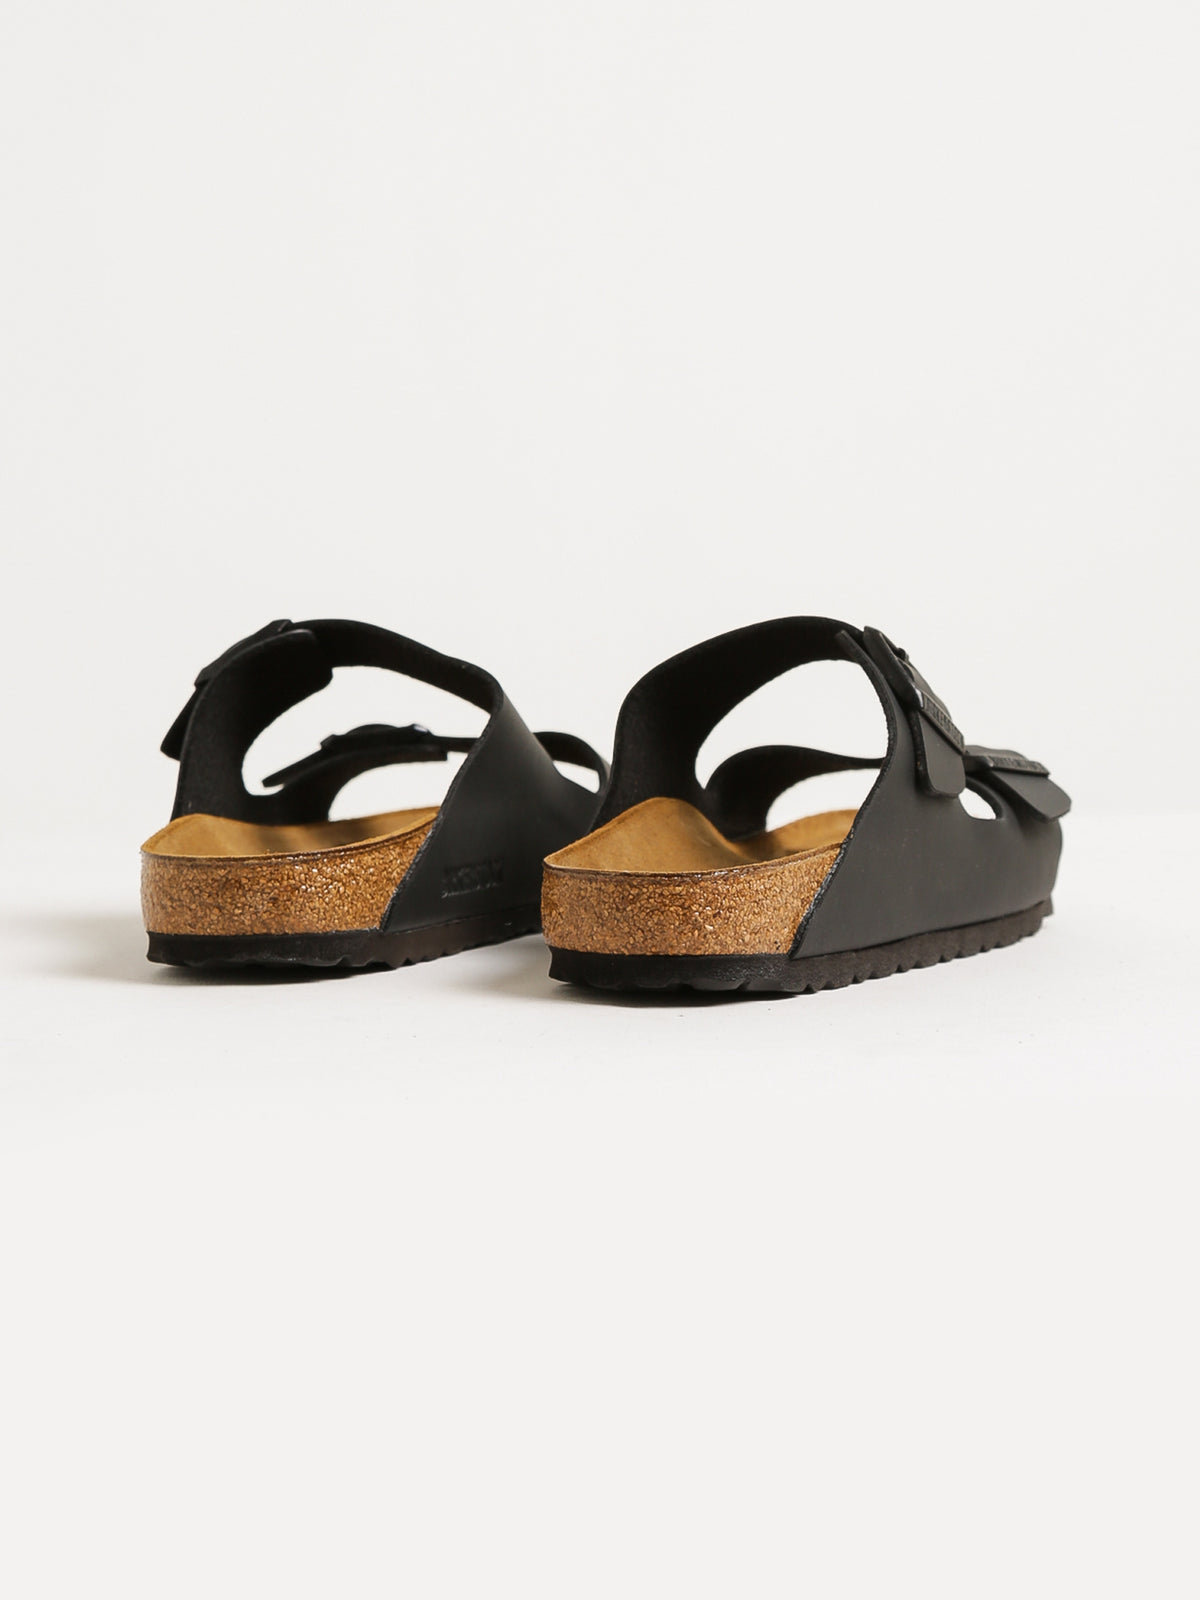 Unisex Arizona Two-Strap Narrow Width Sandals in Black Birko-Flor